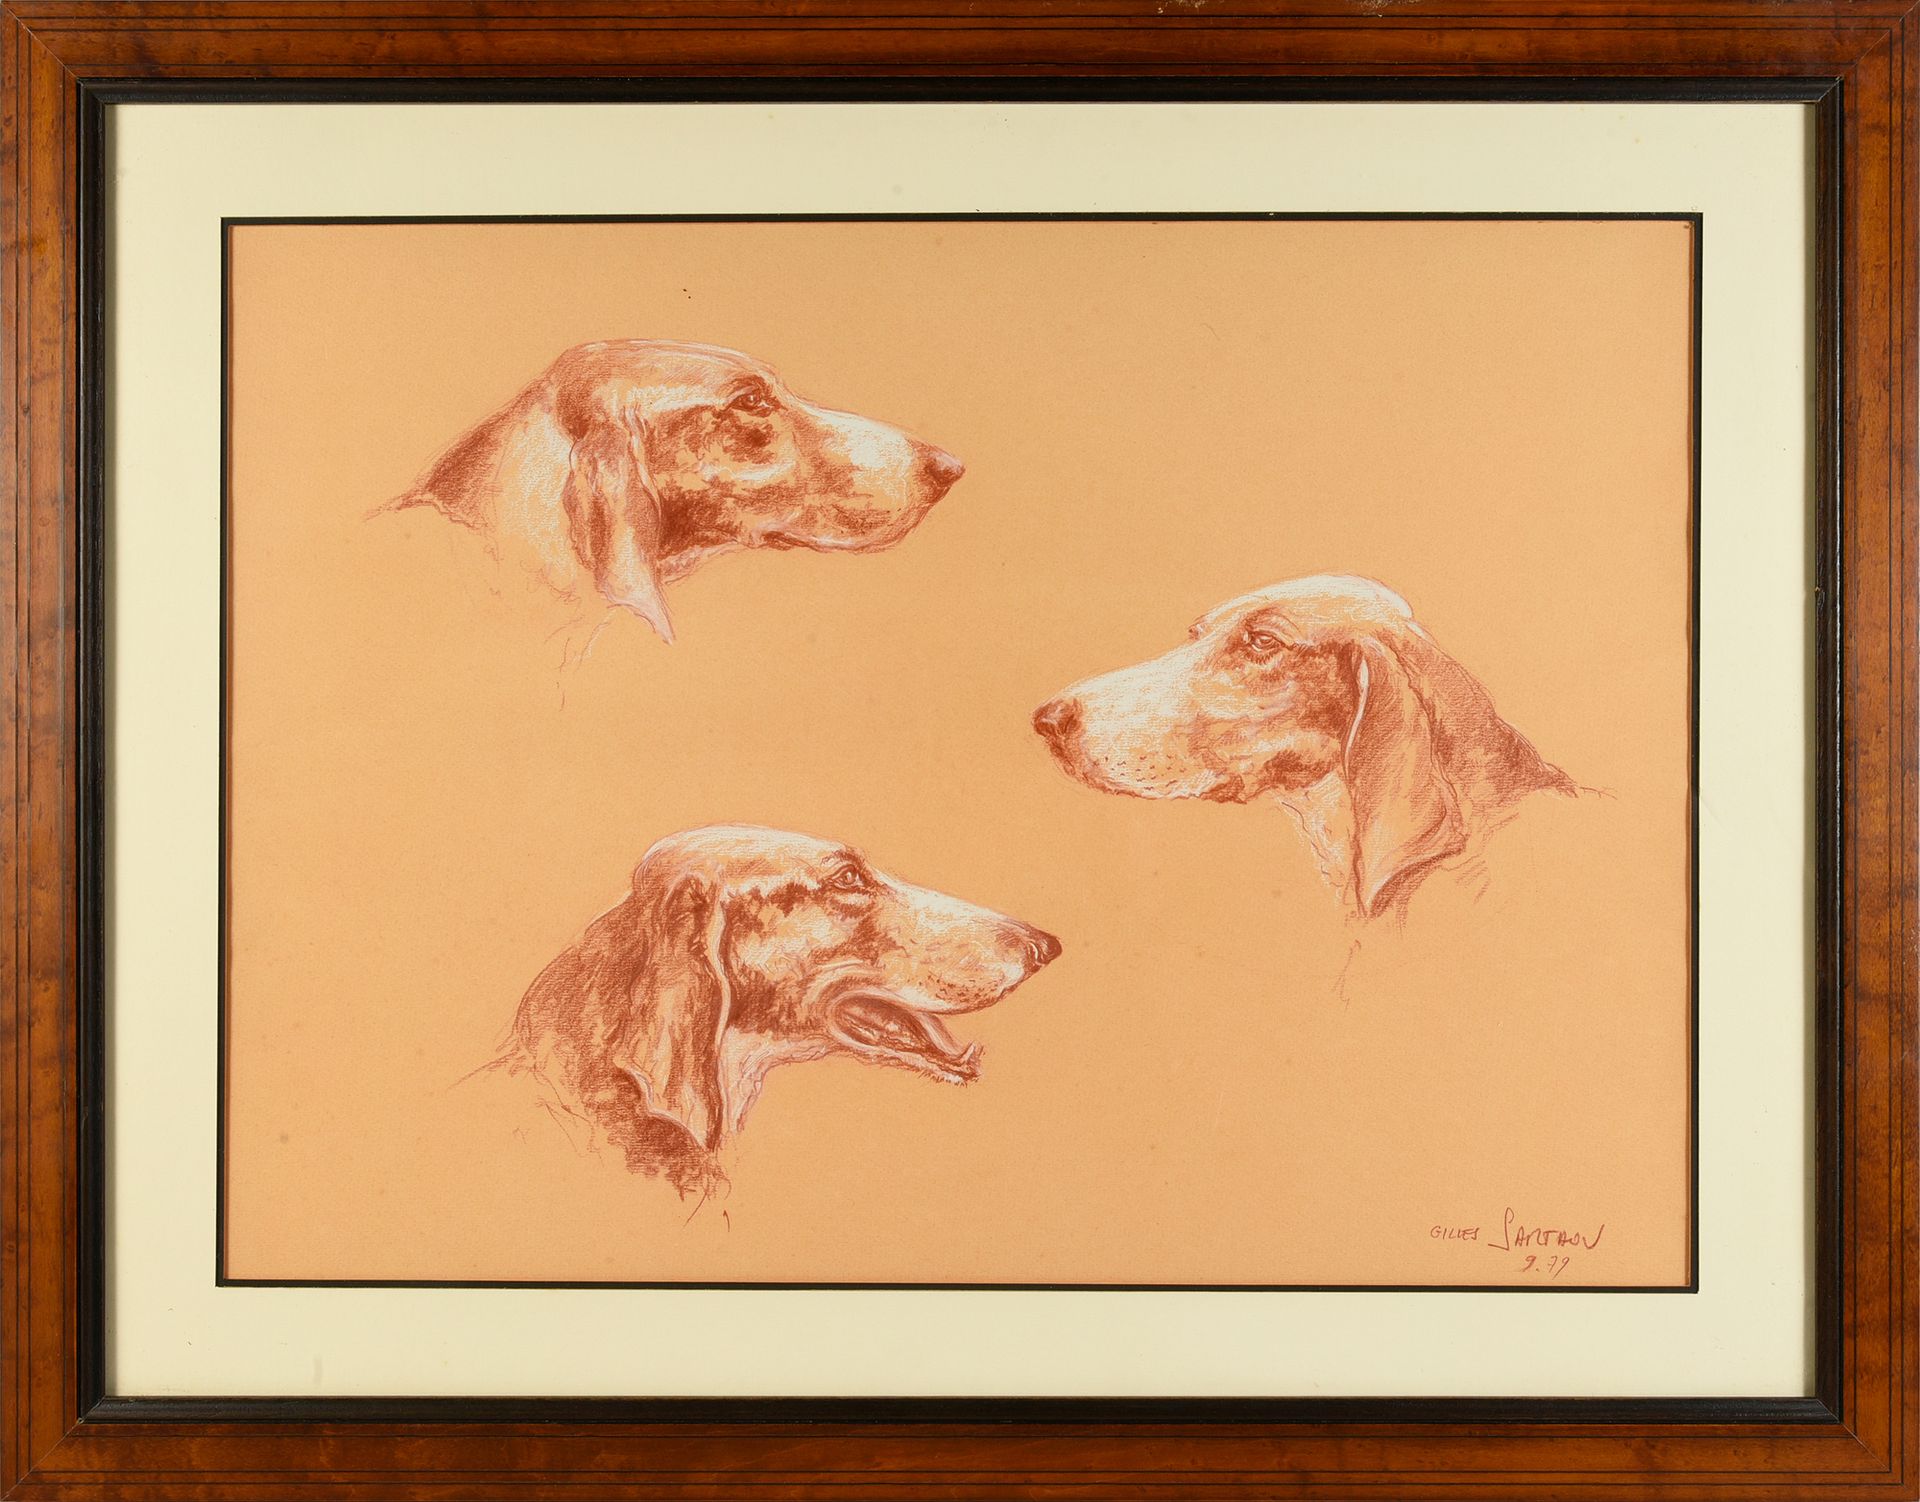 Gilles Sarthou (1953) 三只猎犬的头像。
，右下角有签名和日期，1979年。
42 x 58 cm